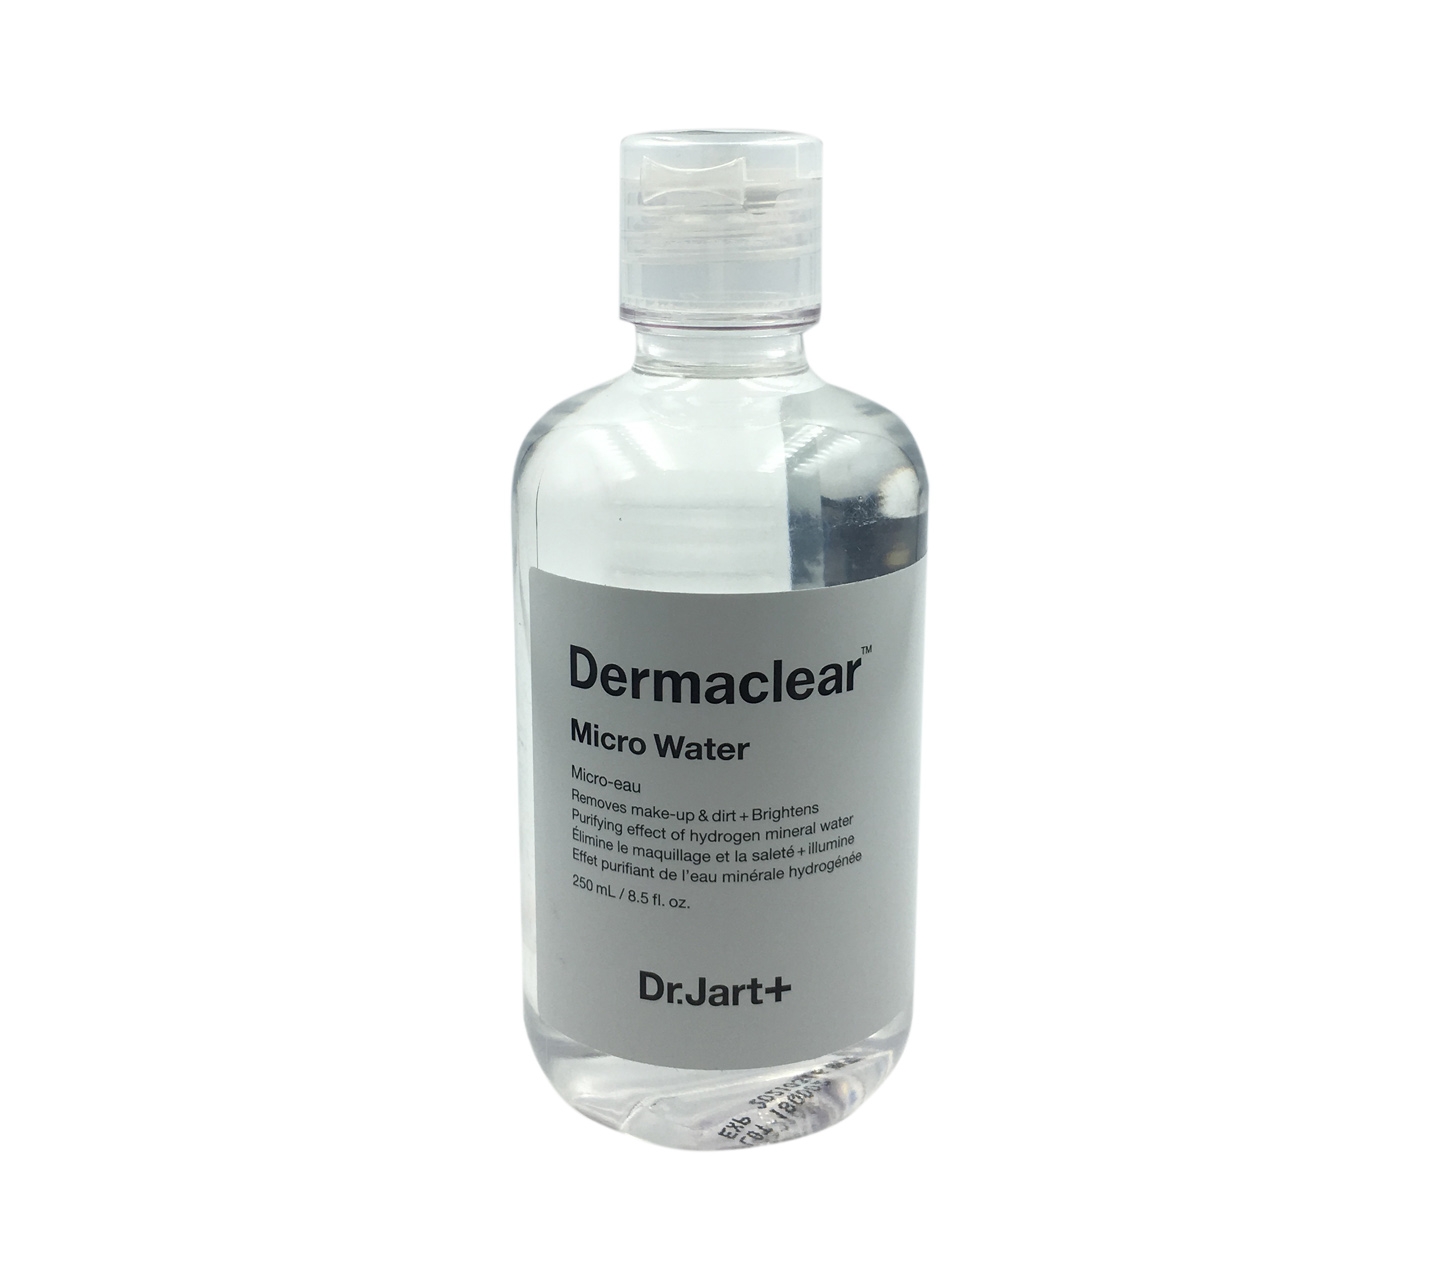 Dr.Jart+ dermaclear micro water